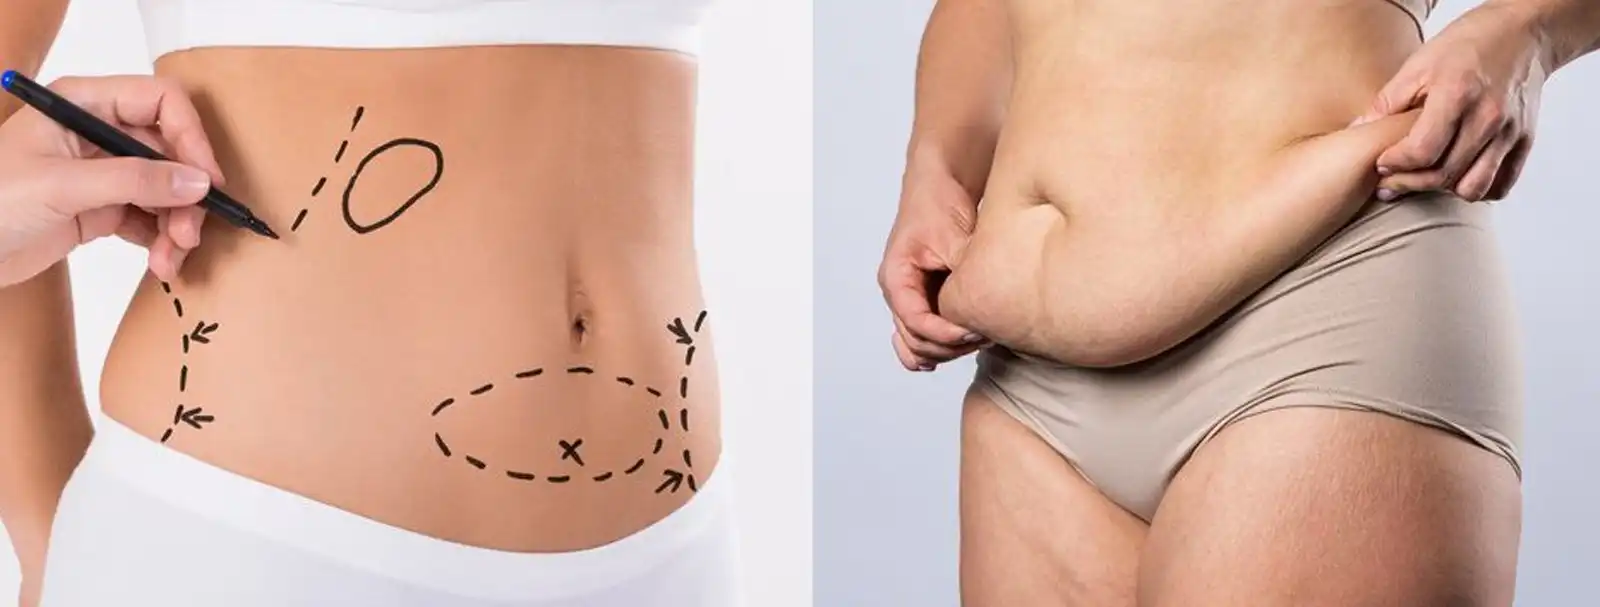 Liposuction vs Tummy Tuck